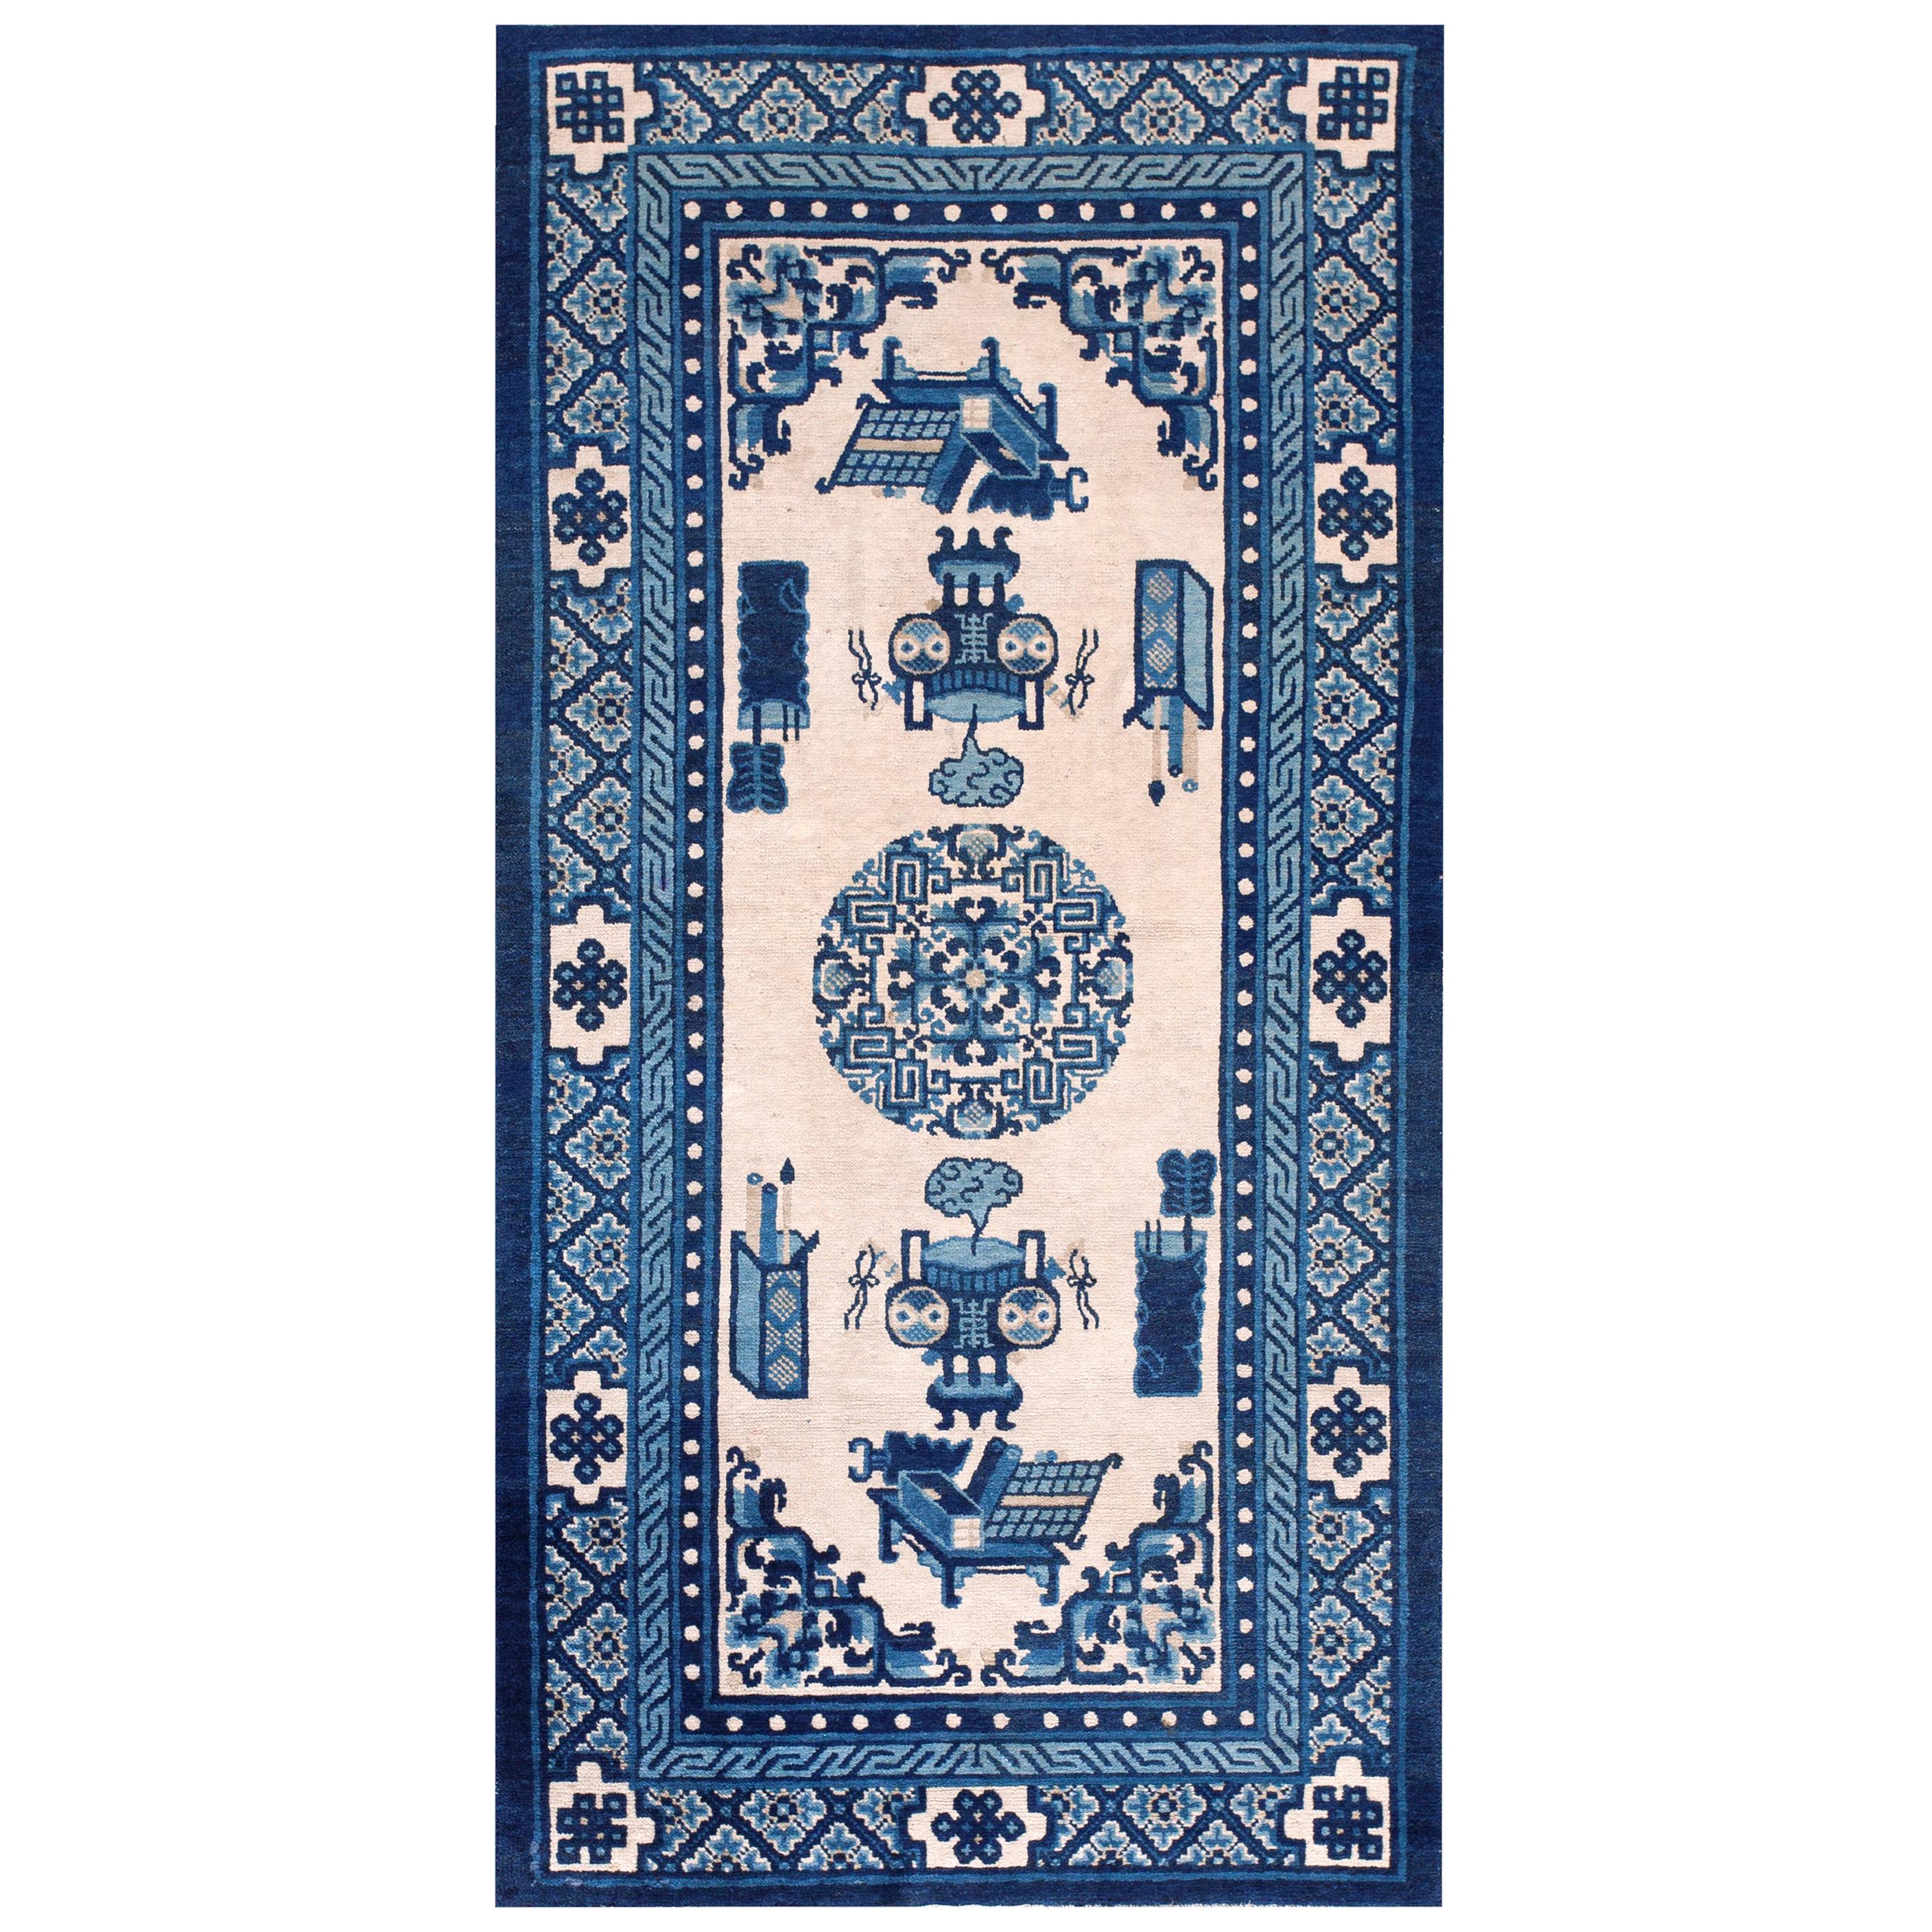 Early 20th Century N. Chinese Baotou Carpet ( 3'2" x 6' - 97 x 183 )